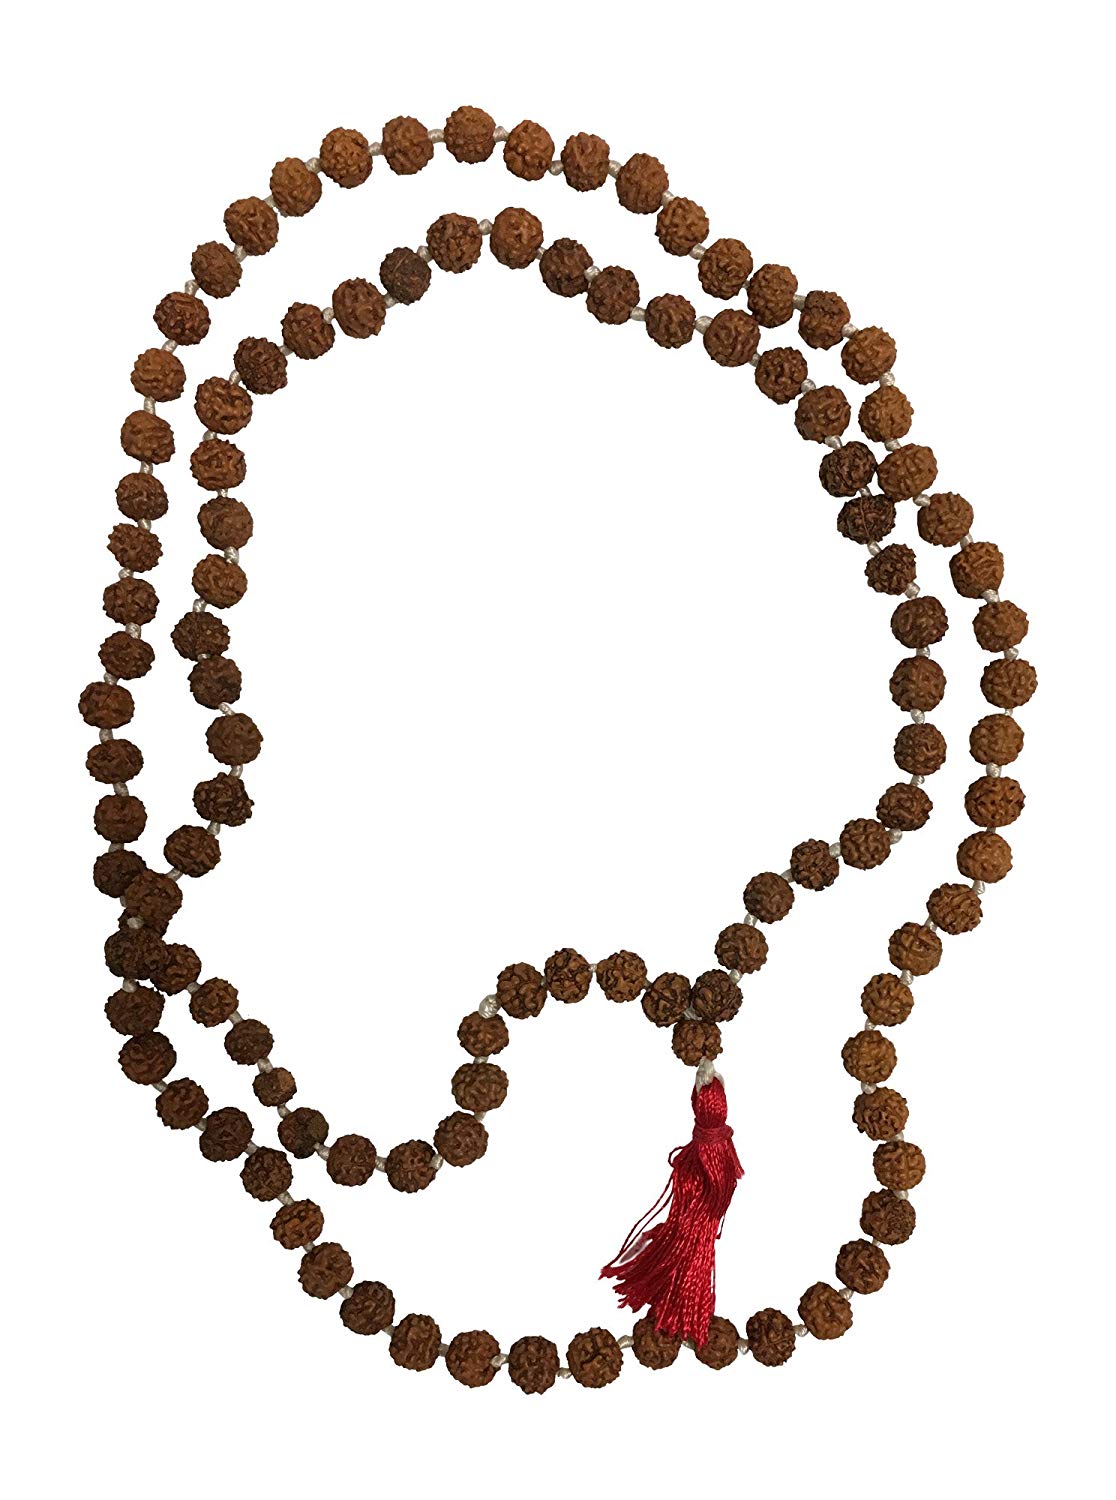 Om Namah Shivay Rudraksha 108ct 6mm Tibetan Prayer Beads Mala Rosary - Ambali Fashion Necklaces accessory, bohemian, boho, ethnic, gypsy, hippie, indian, meditation, necklace, new age, rosary